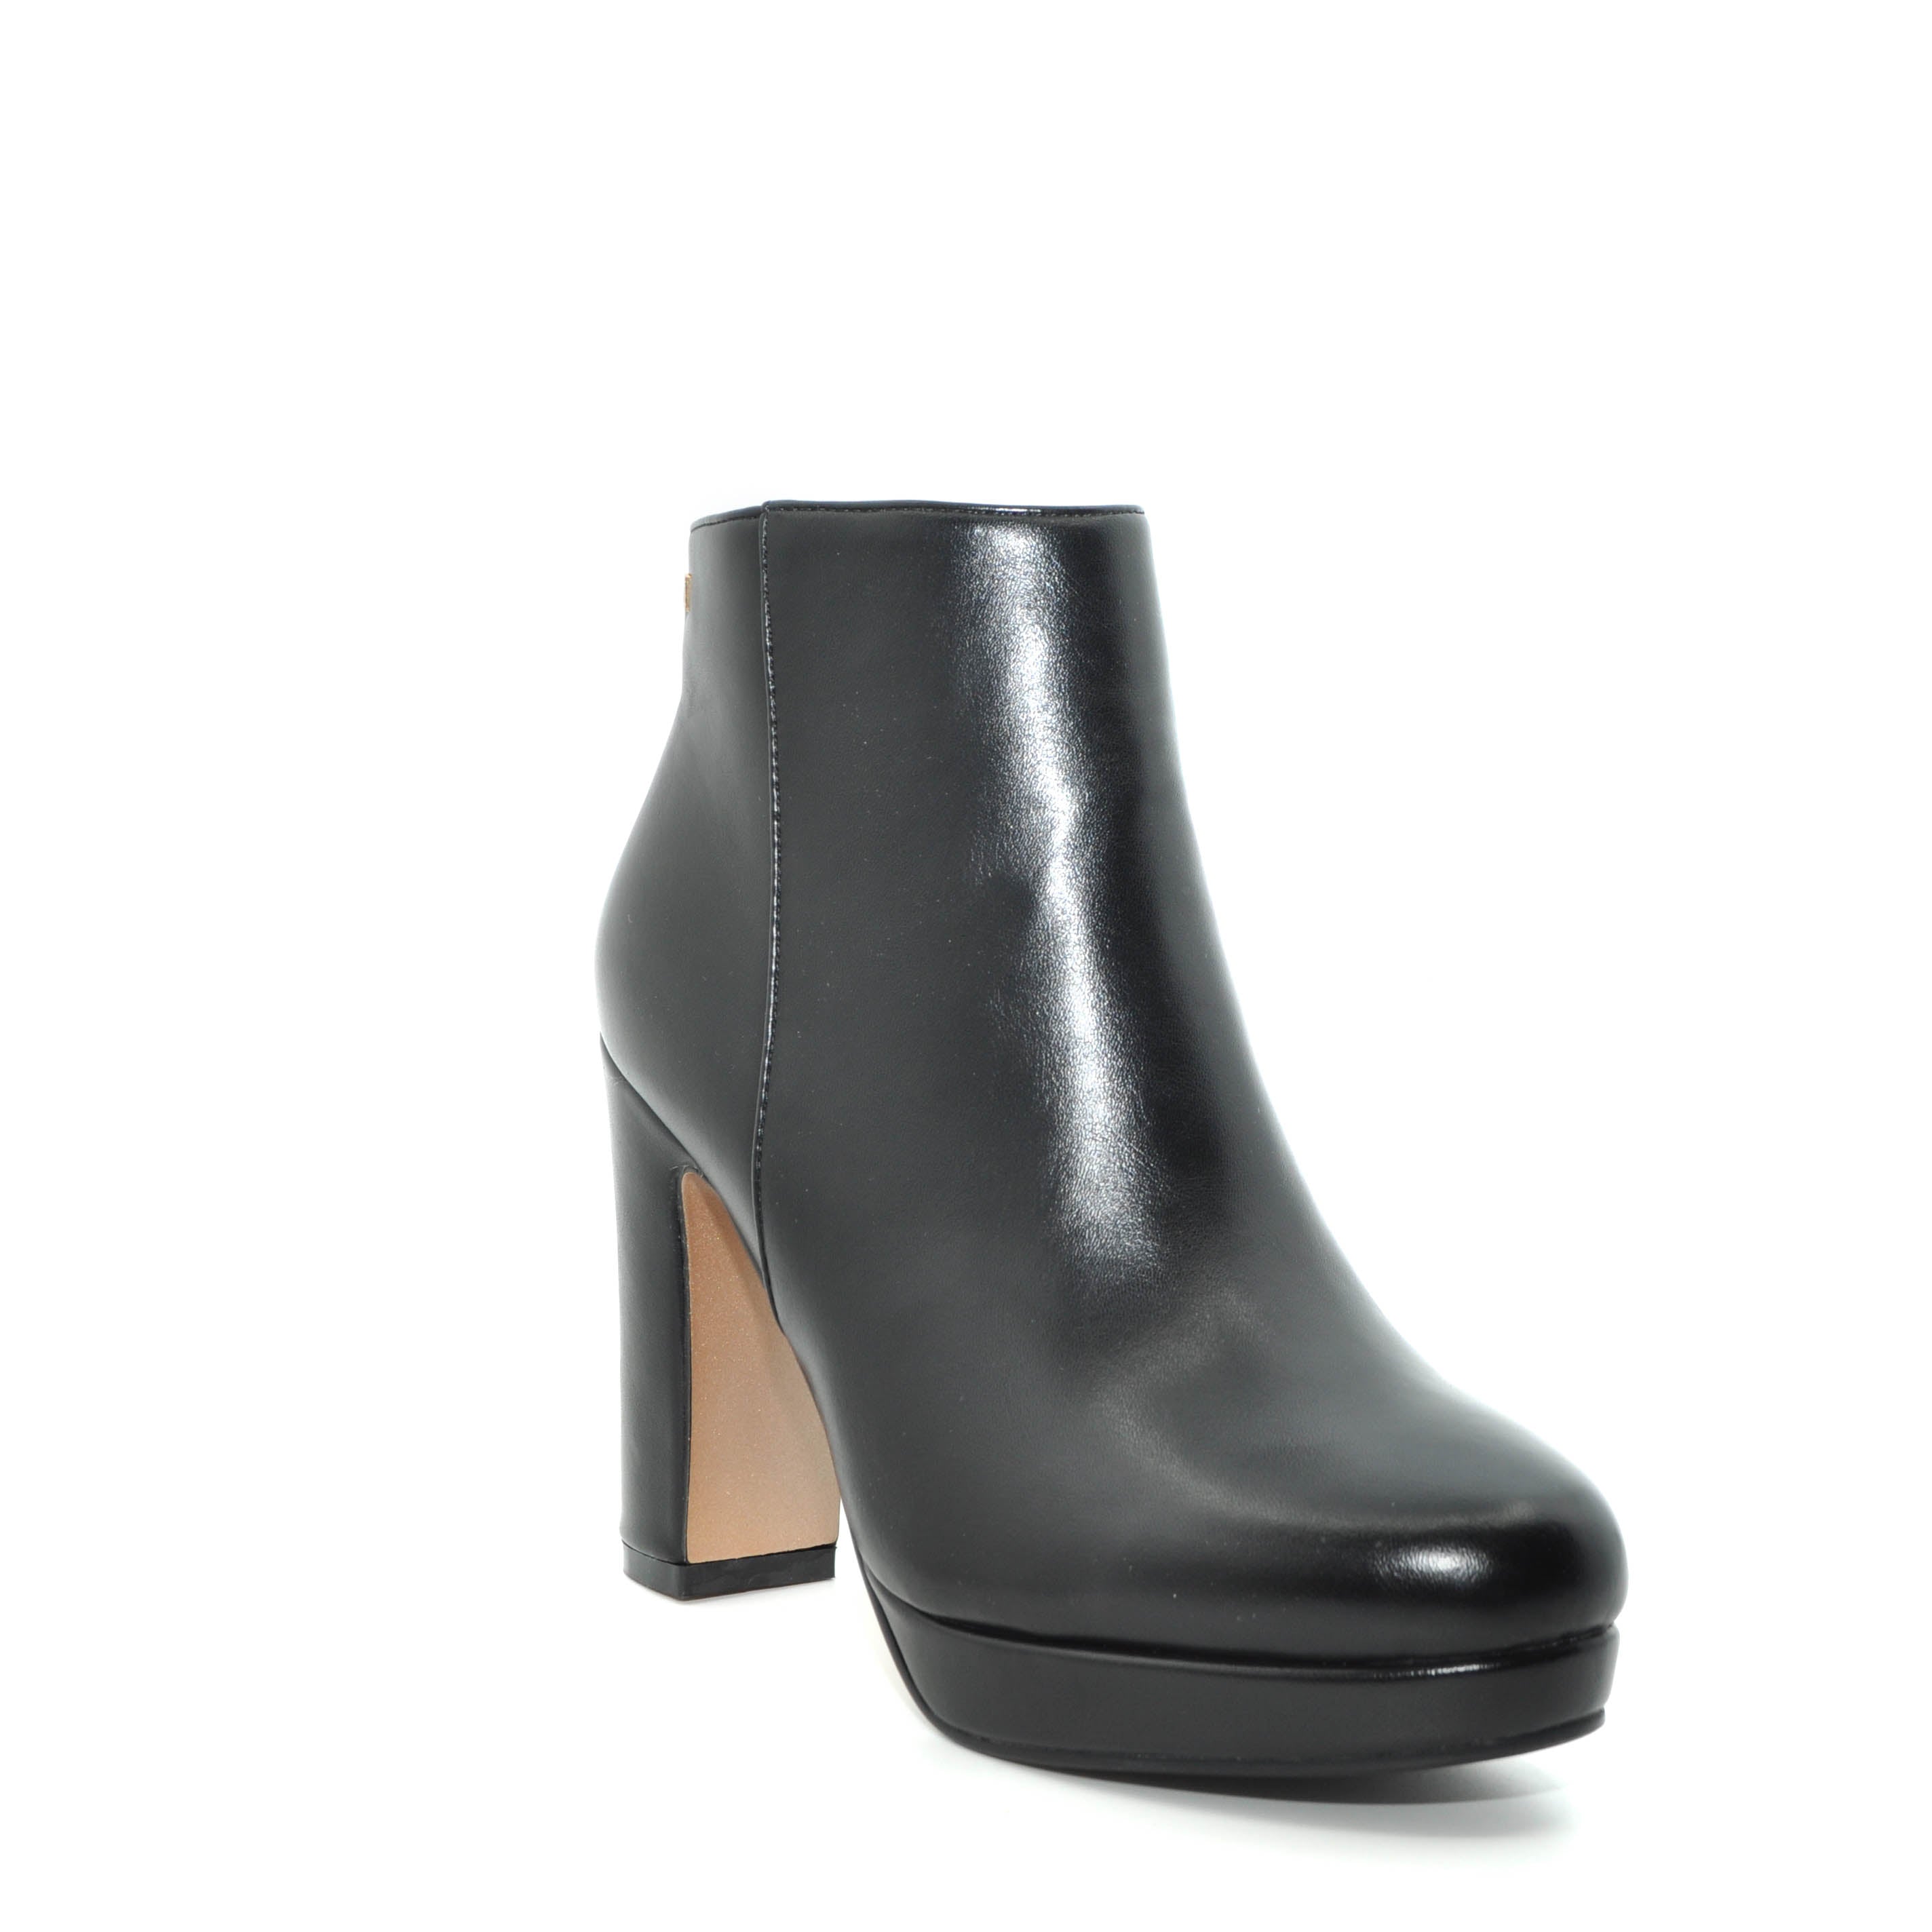 Una healy black square heel boots